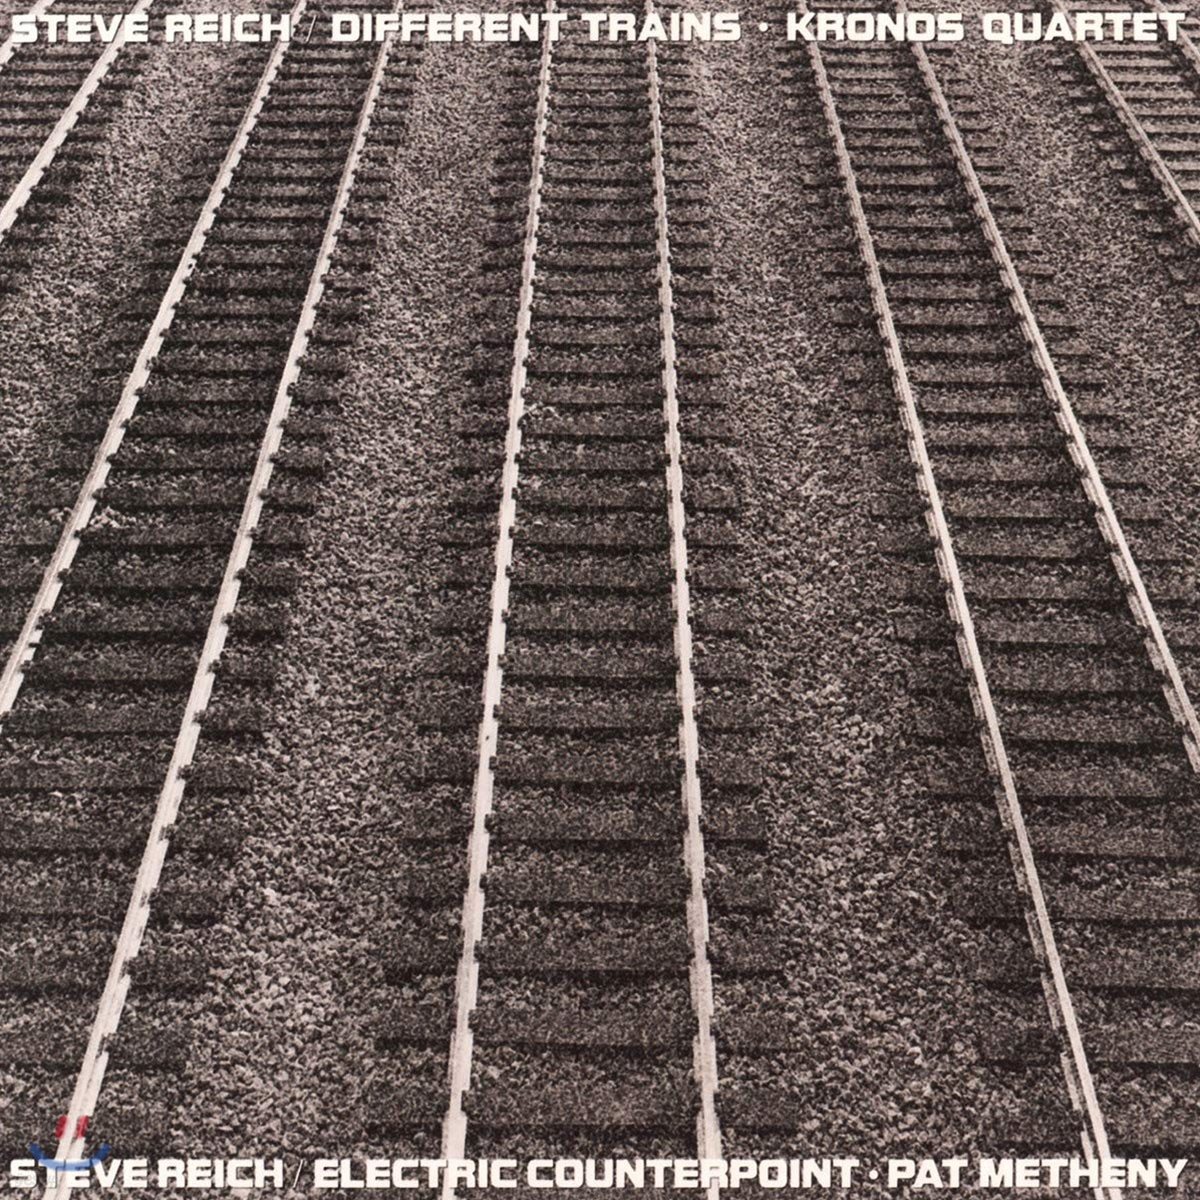 Kronos Quartet / Pat Metheny 스티브 라이히: 디퍼런트 트레인, 일렉트릭 카운터포인트 (Steve Reich: Different Trains, Electric Counterpoint)